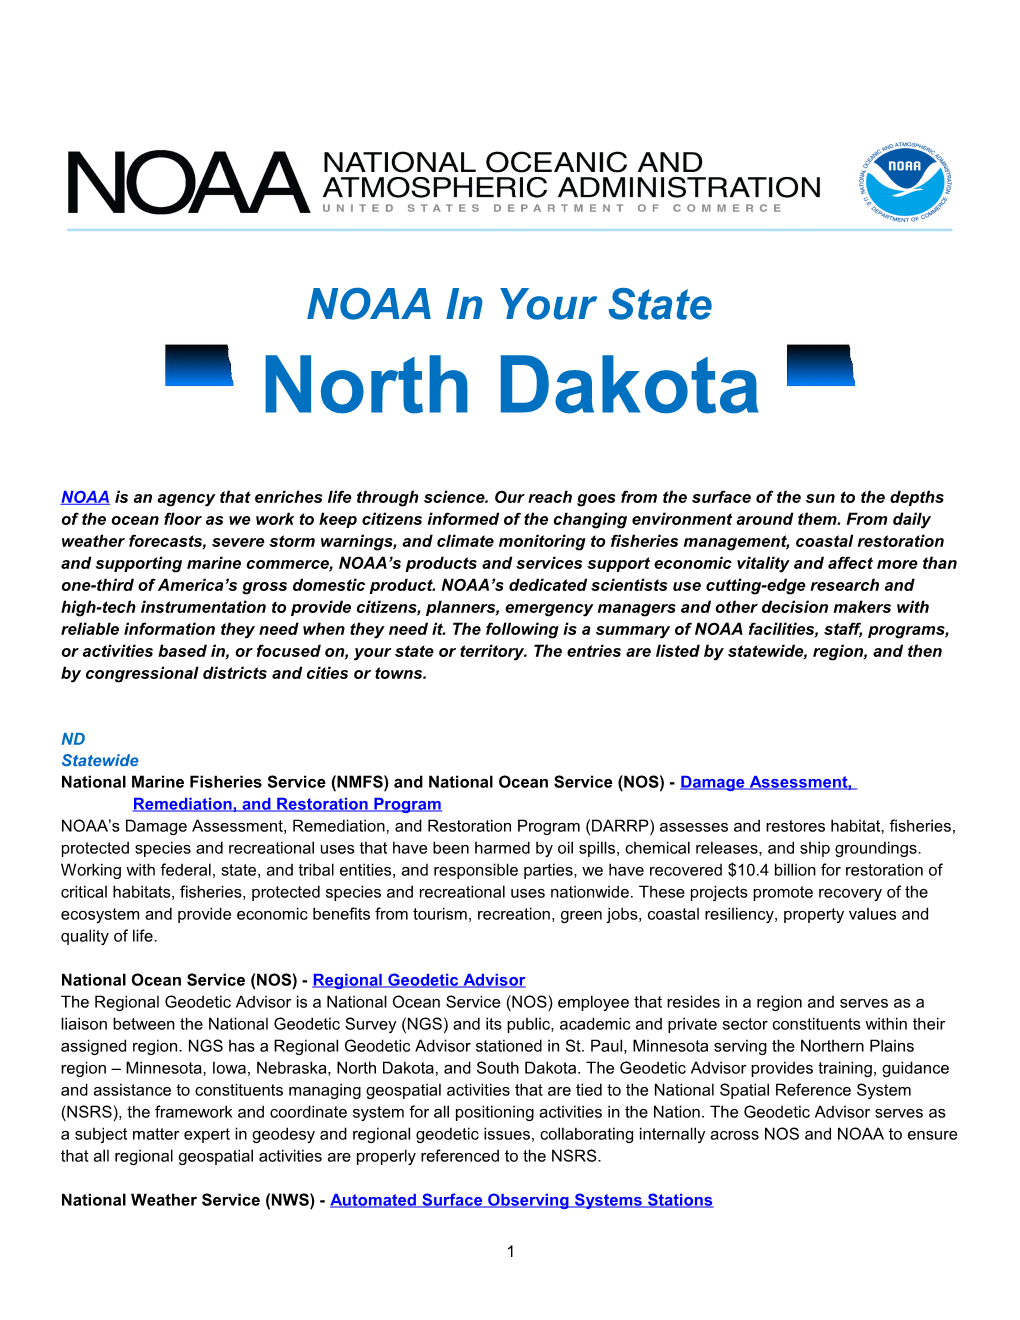 NOAA in Your State - North Dakota